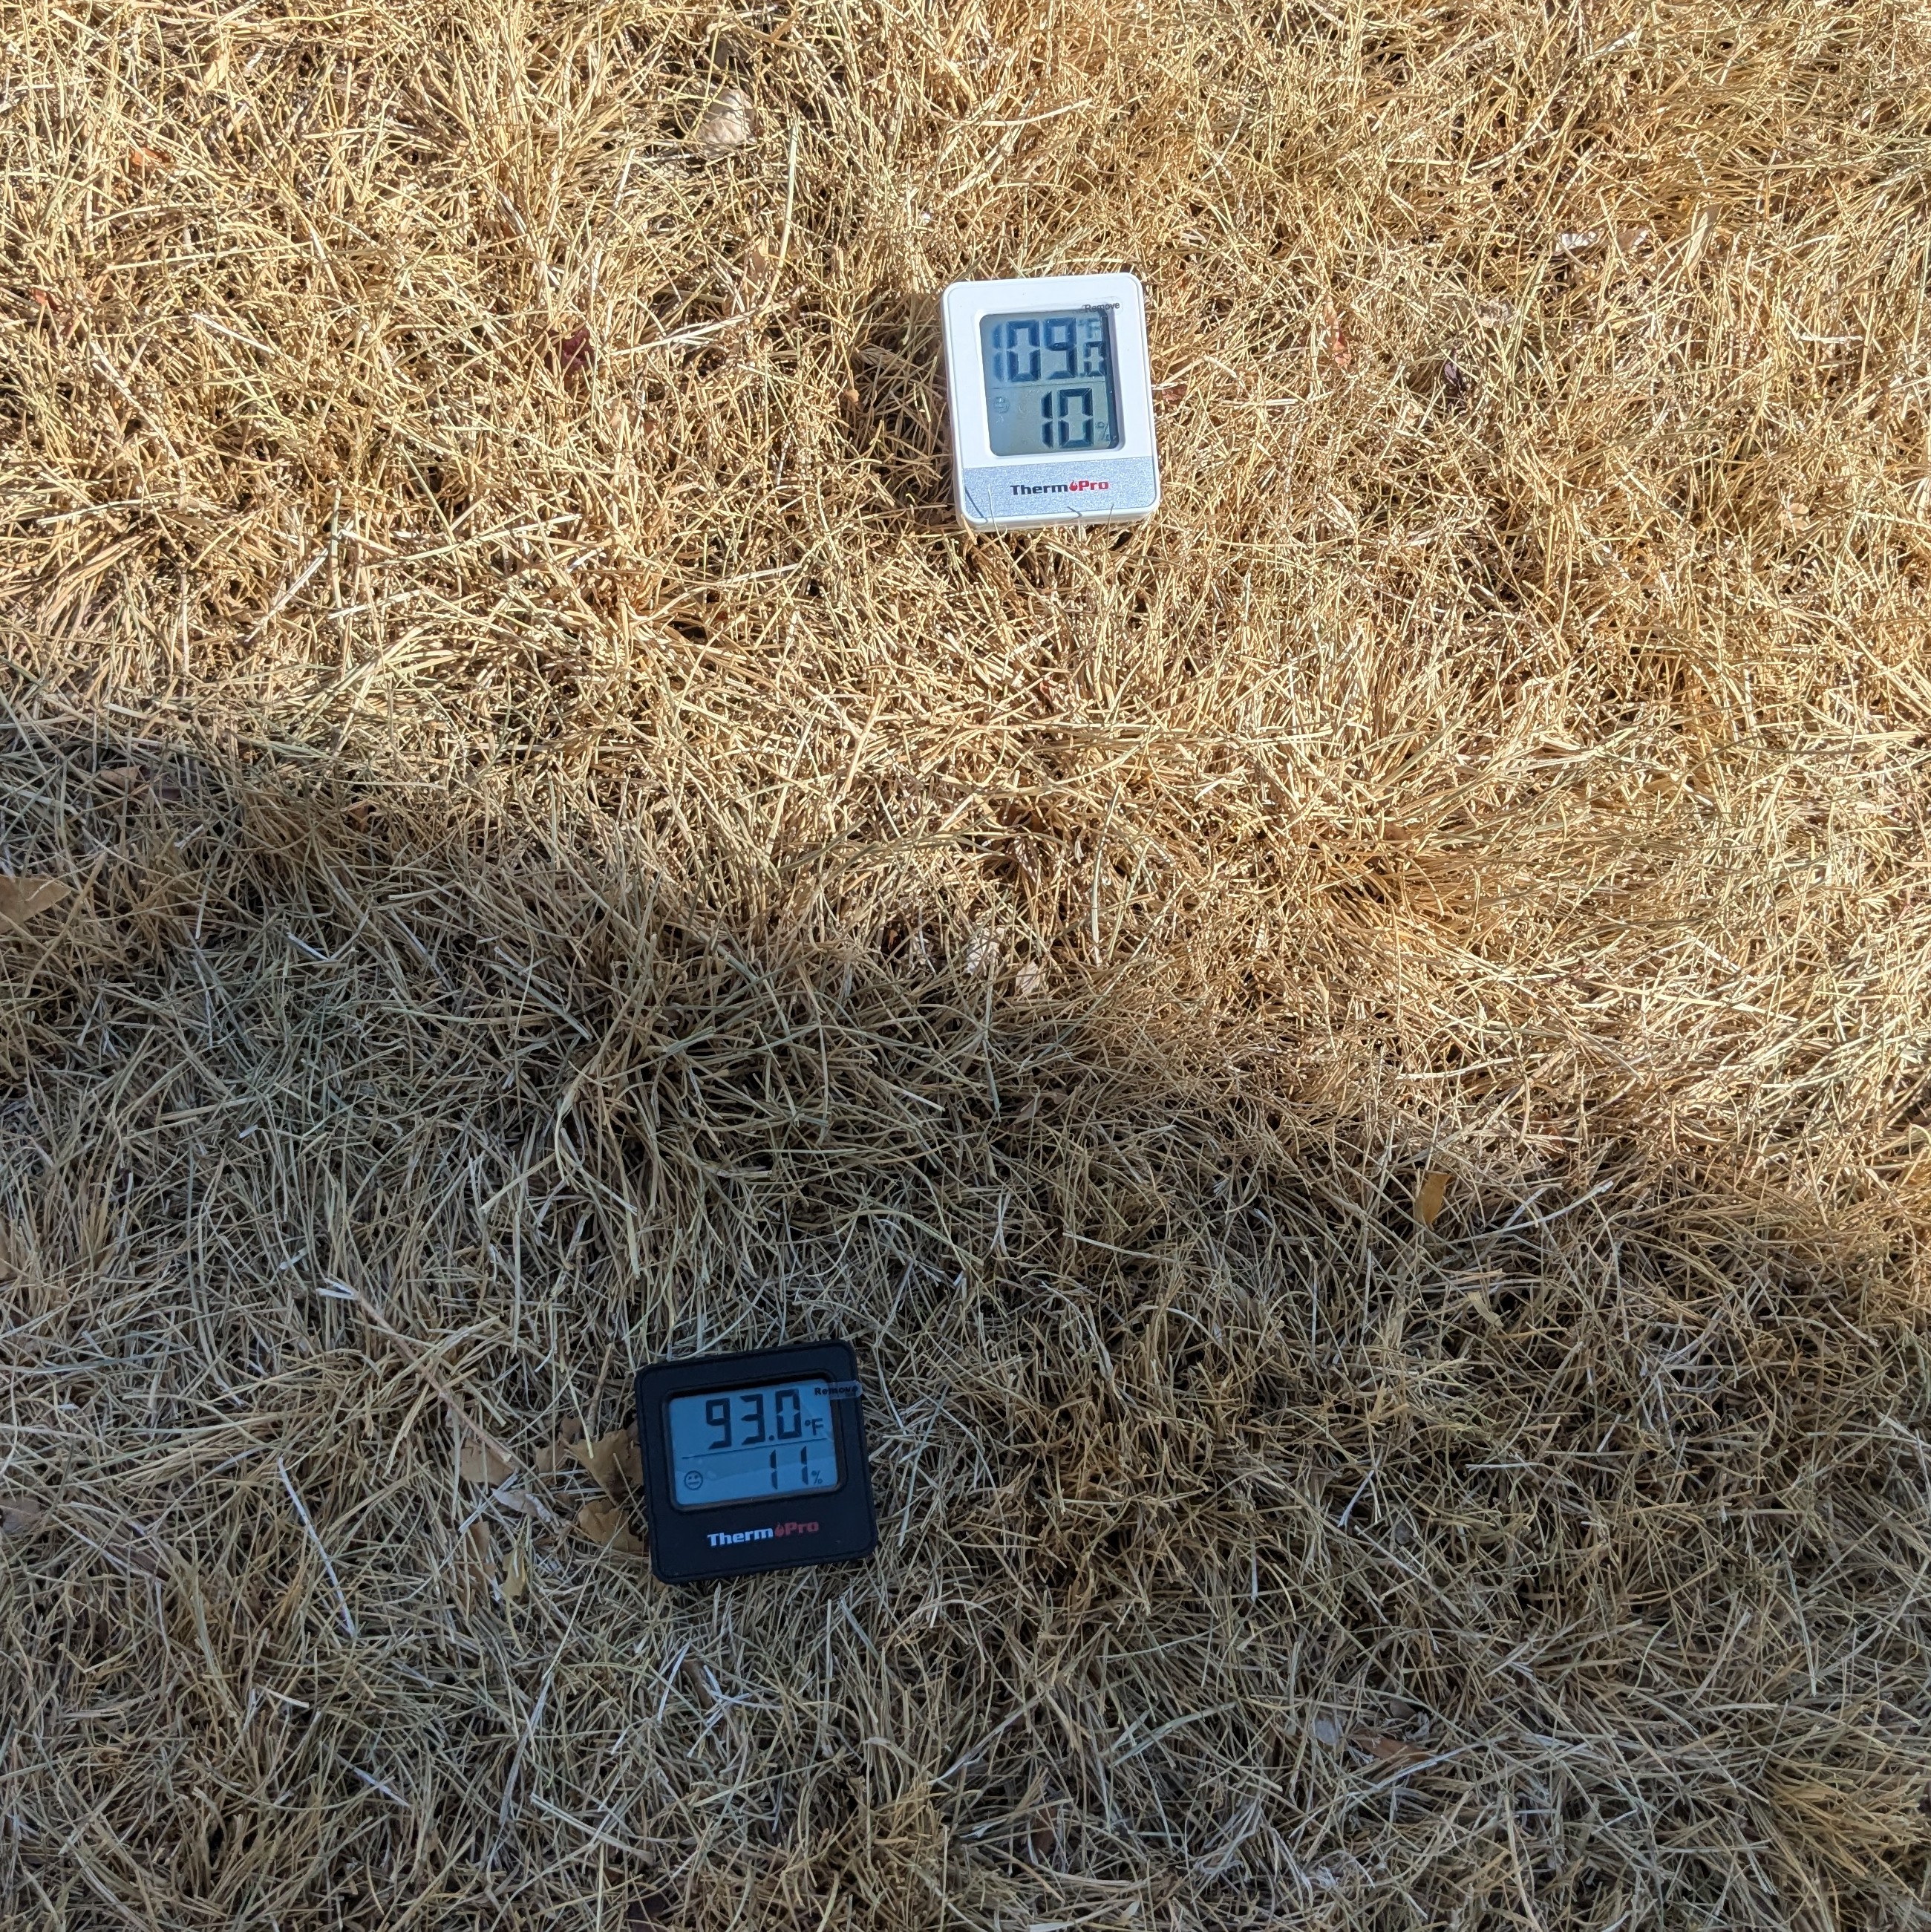 image of temperature gauges in grass